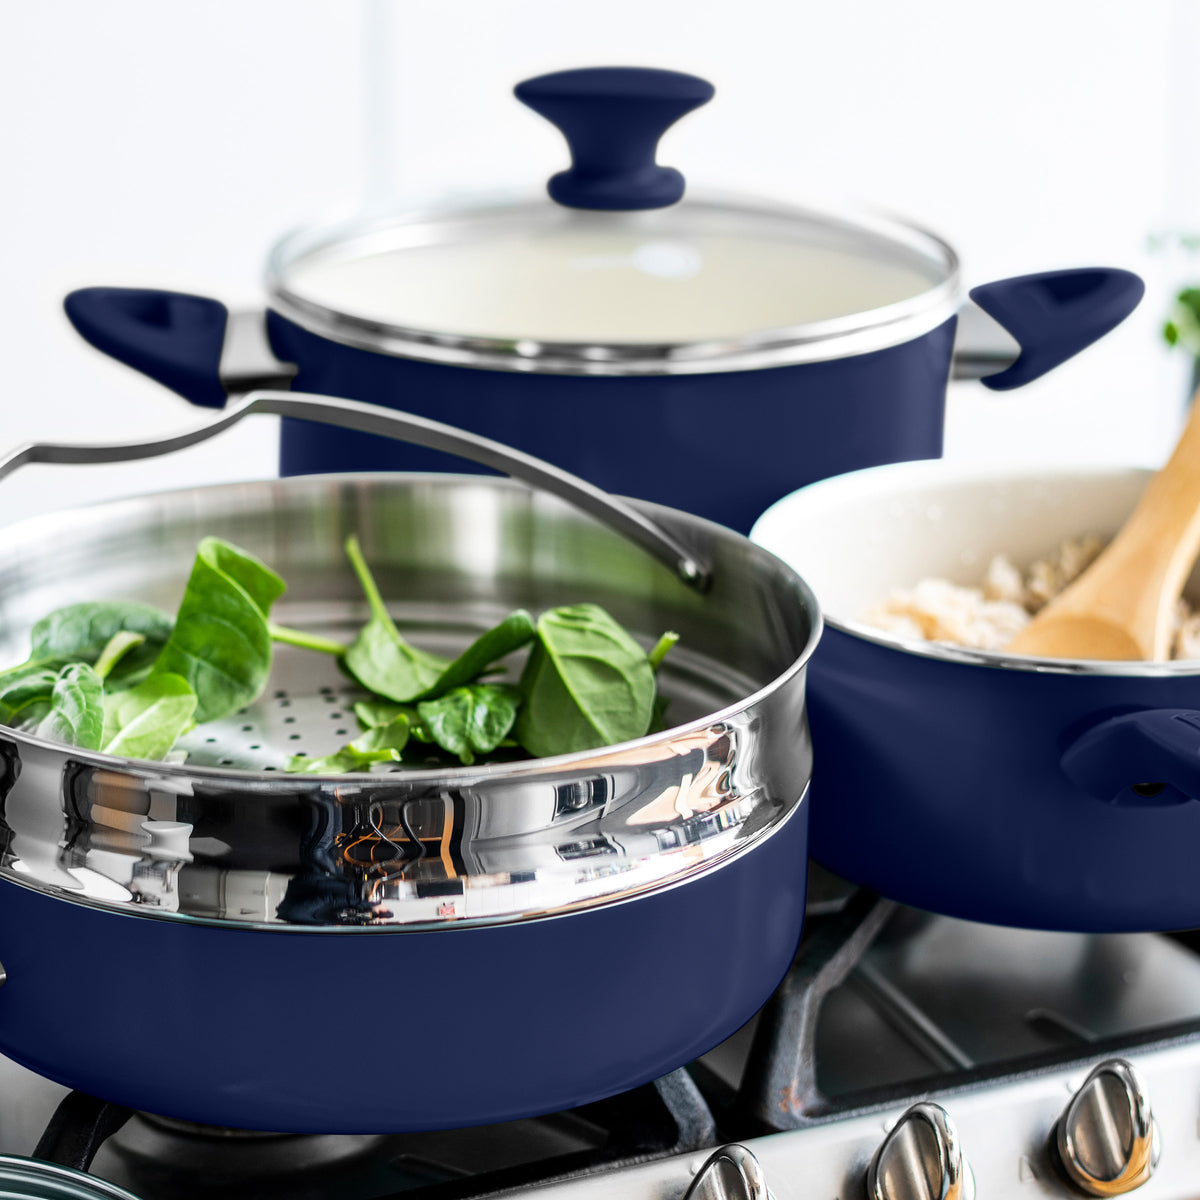 Best Cookware Set - GreenPan Rio Healthy Ceramic Nonstick Cookware